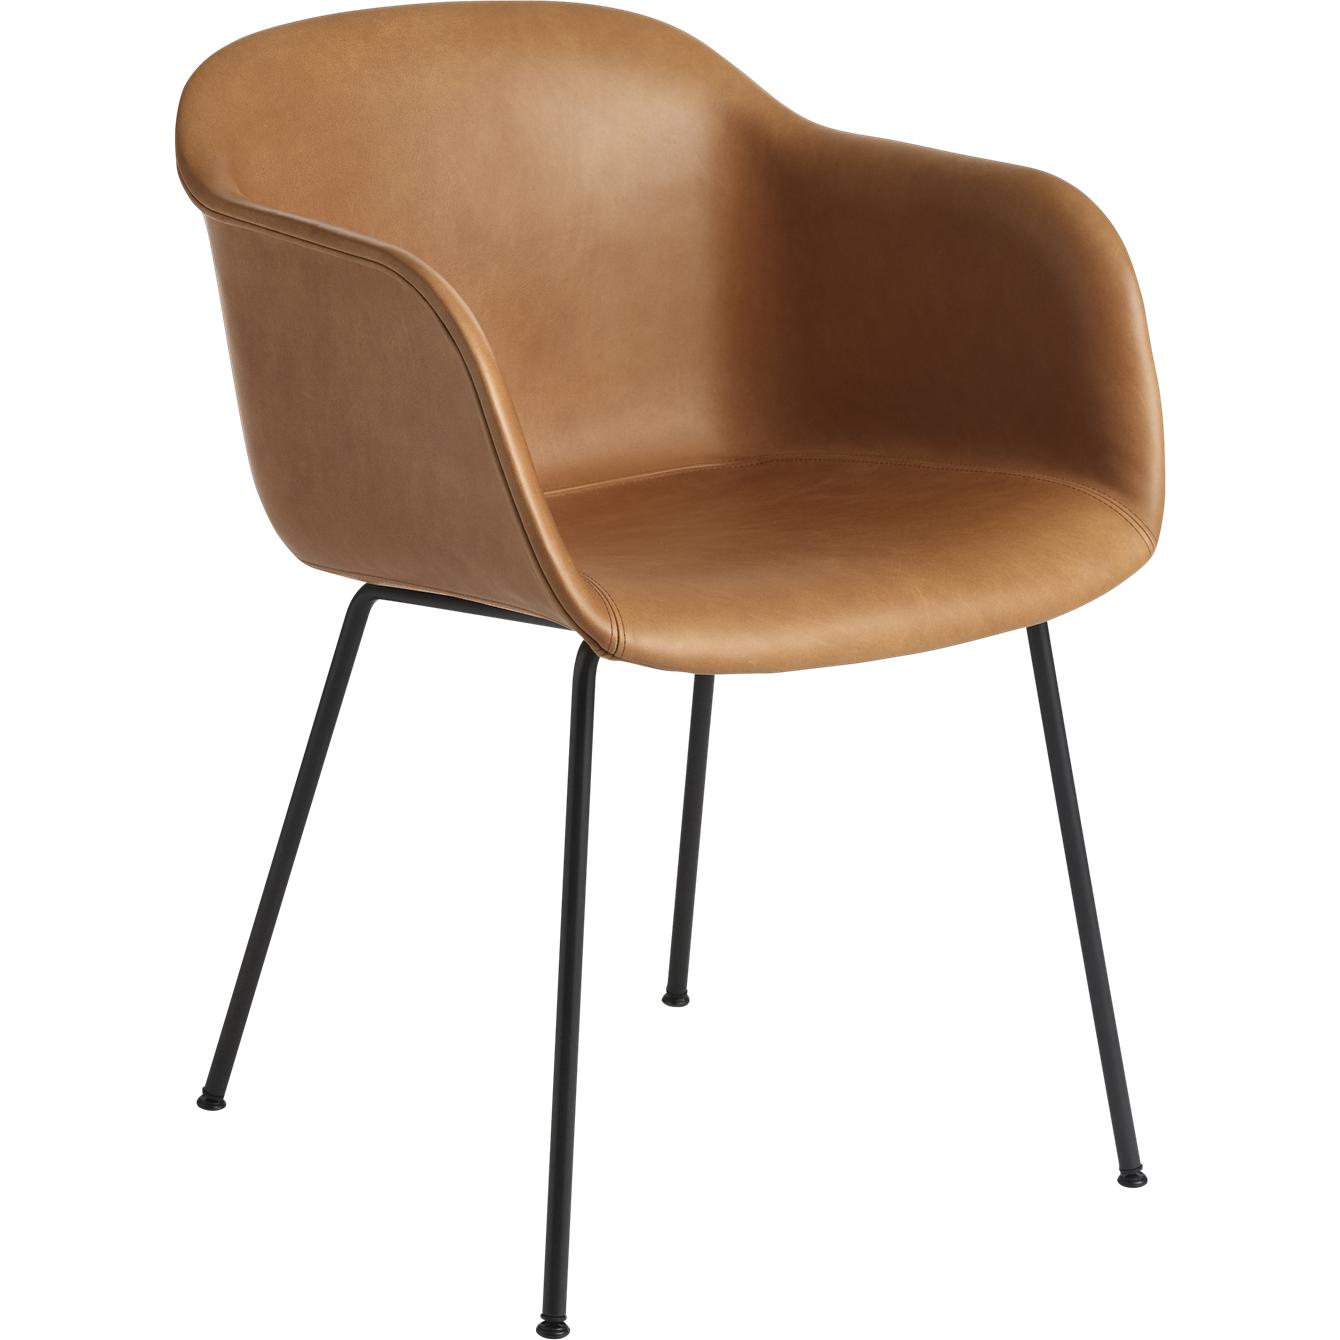 Base de tubo de sillón de fibra muuto, asiento de cuero, cuero de coñac/ negro